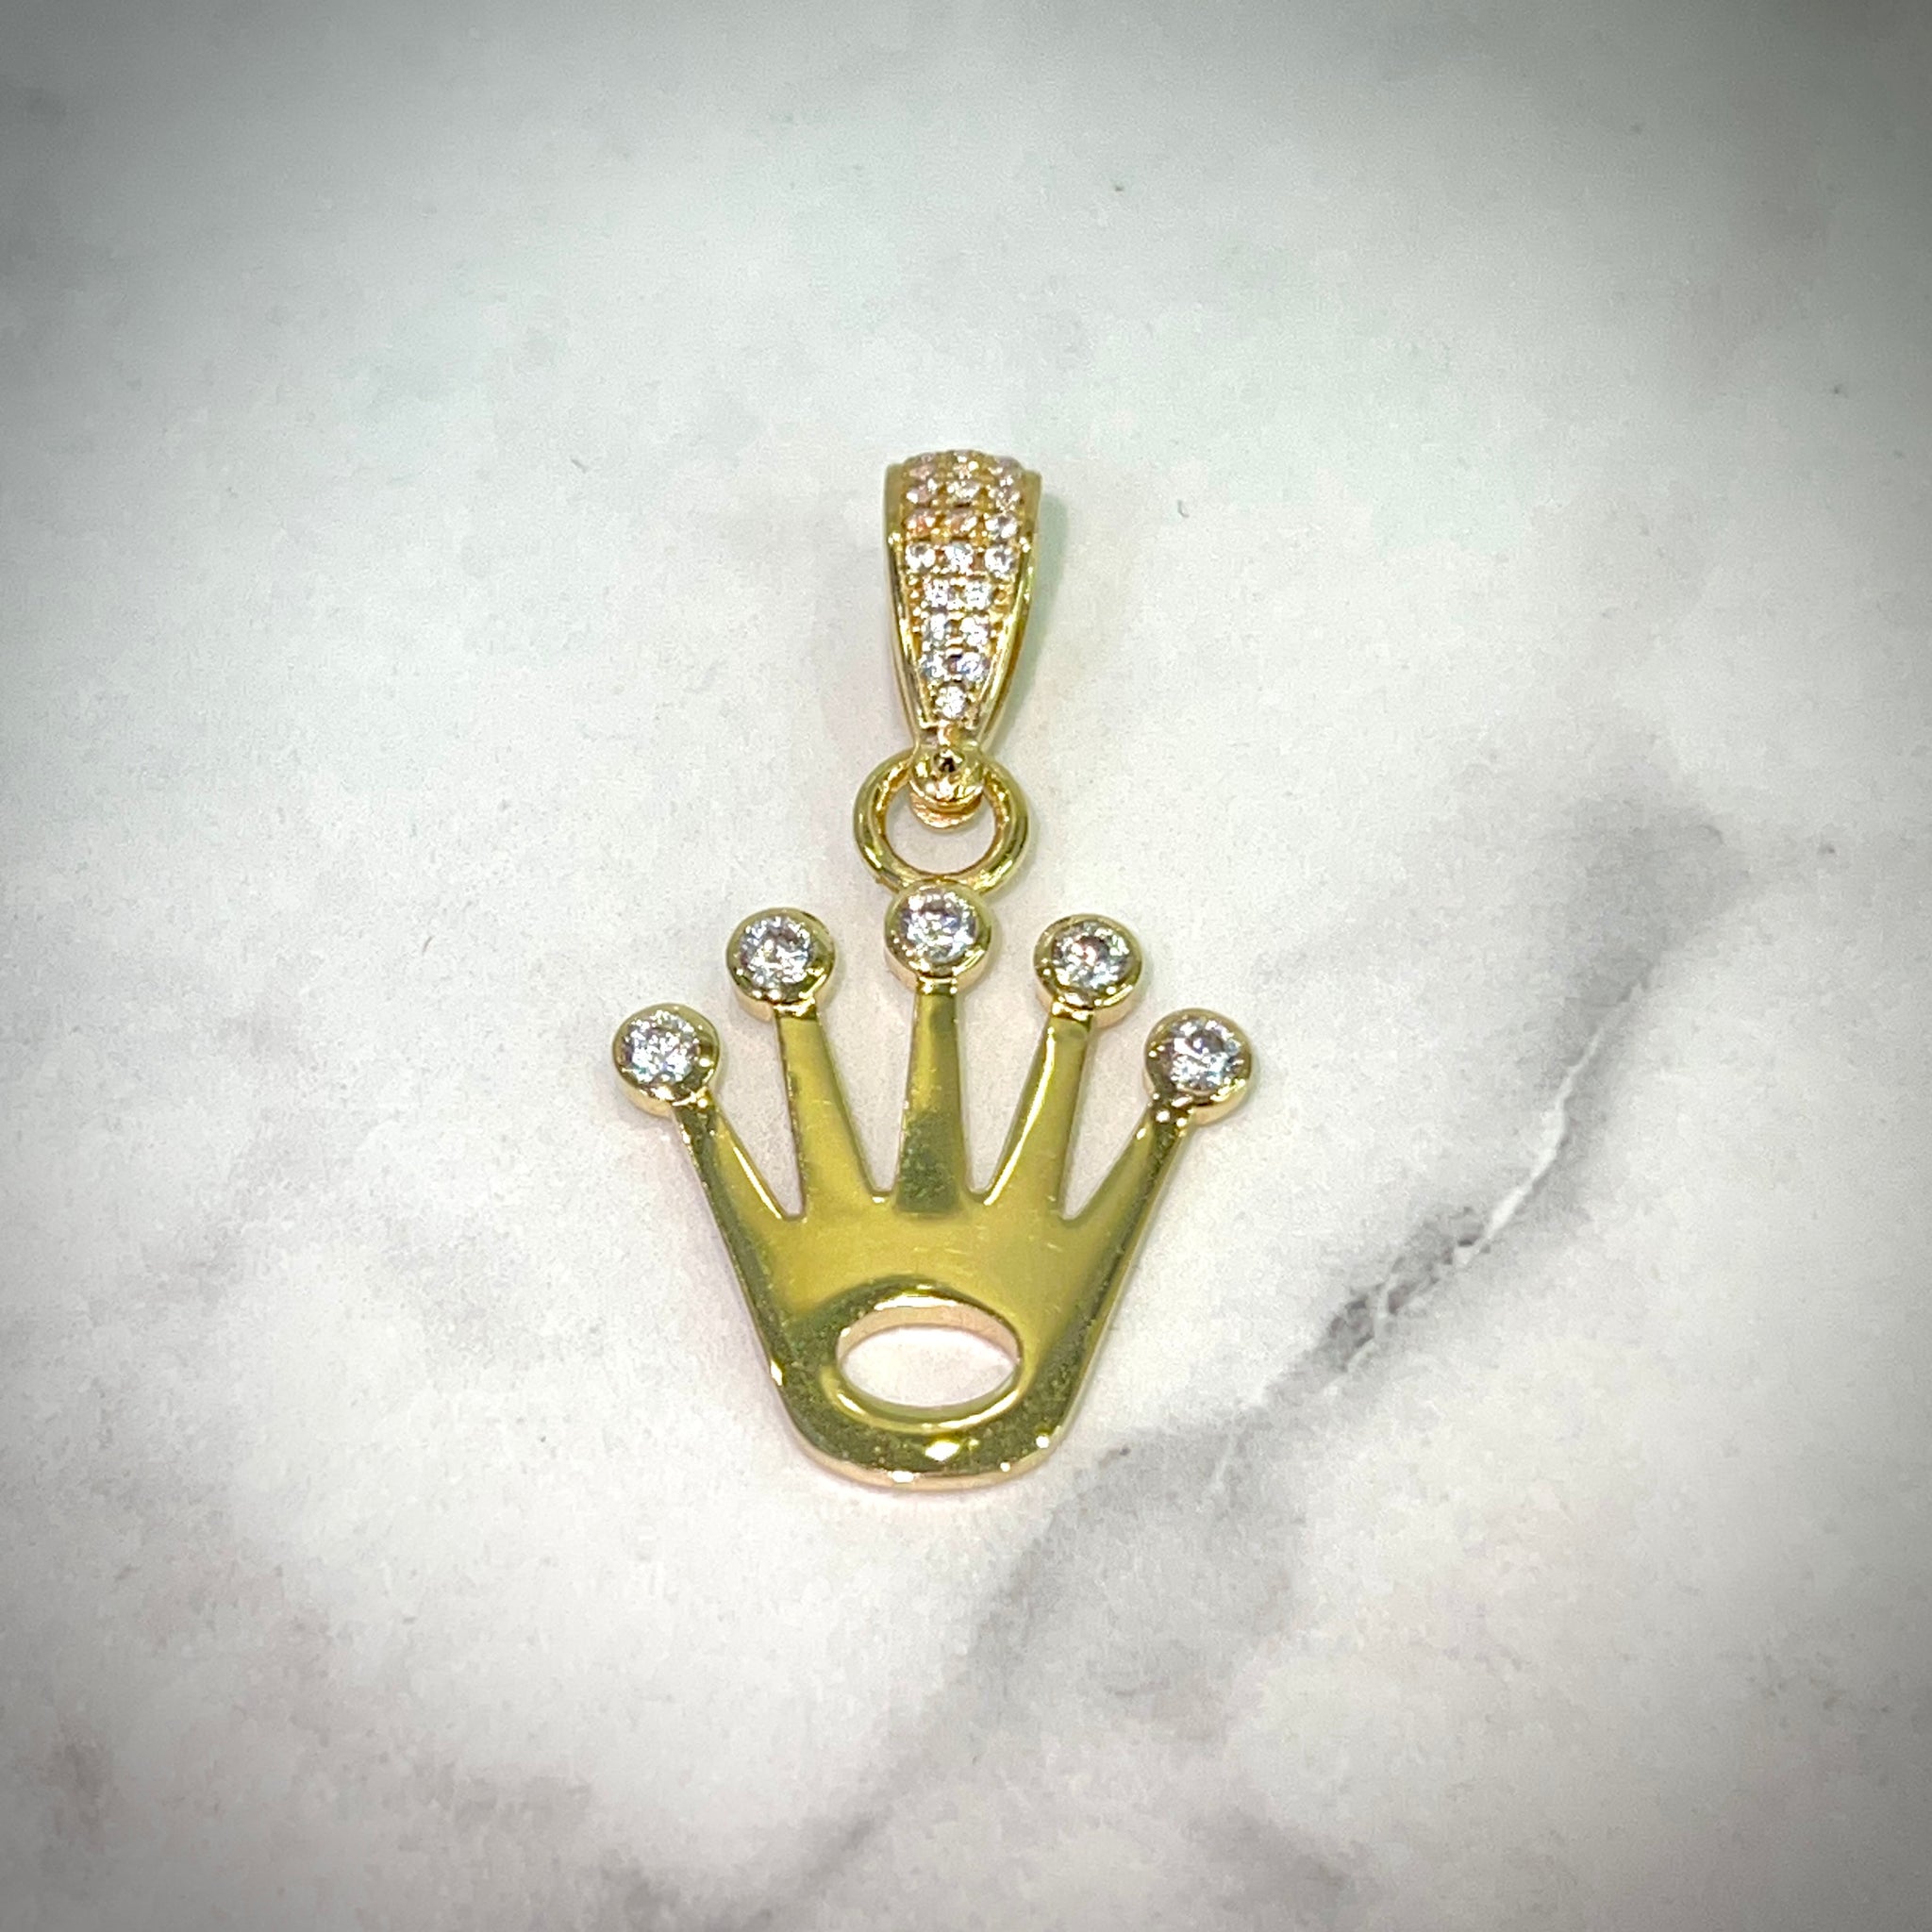 Crown Pendant - 18 carat gold